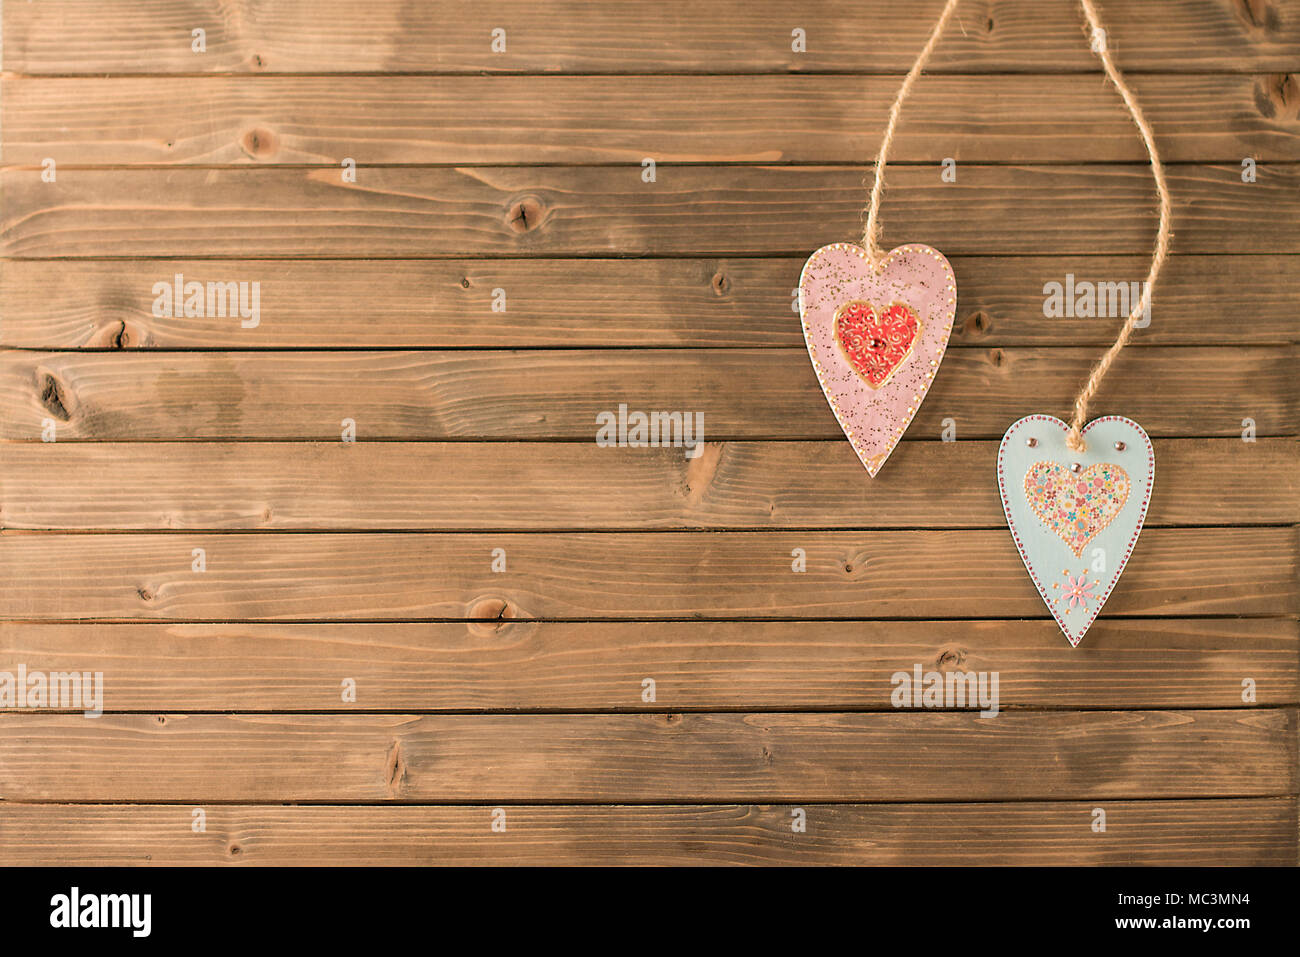 Handmade wooden heart on wooden background. Handmade love decoration. Wooden background with hearts Stock Photo